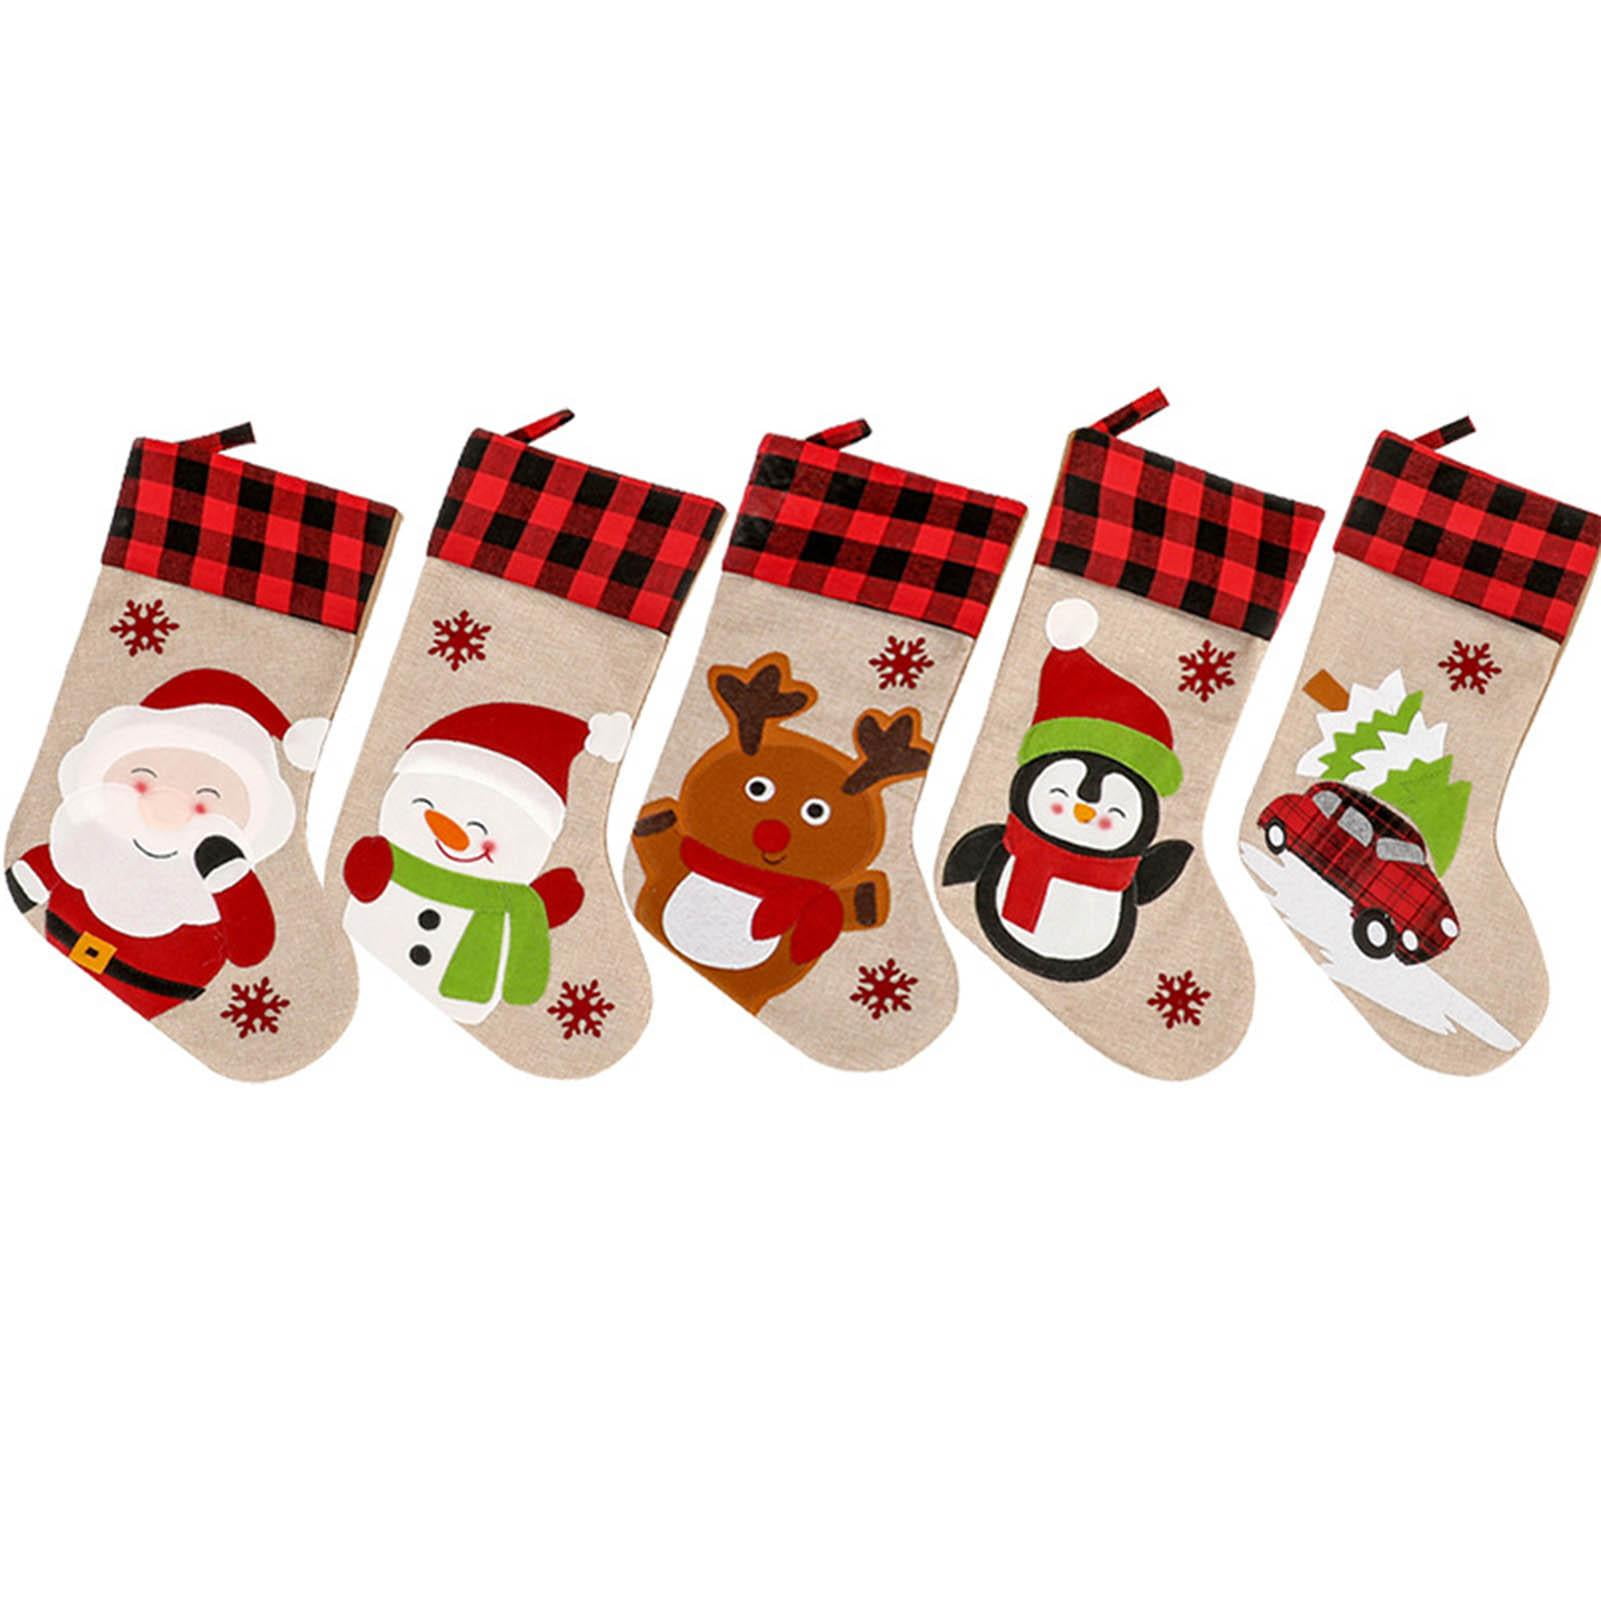 18 inches Christmas Party Santa Claus Decor Snowman Santa Claus Xmas Supplies US 